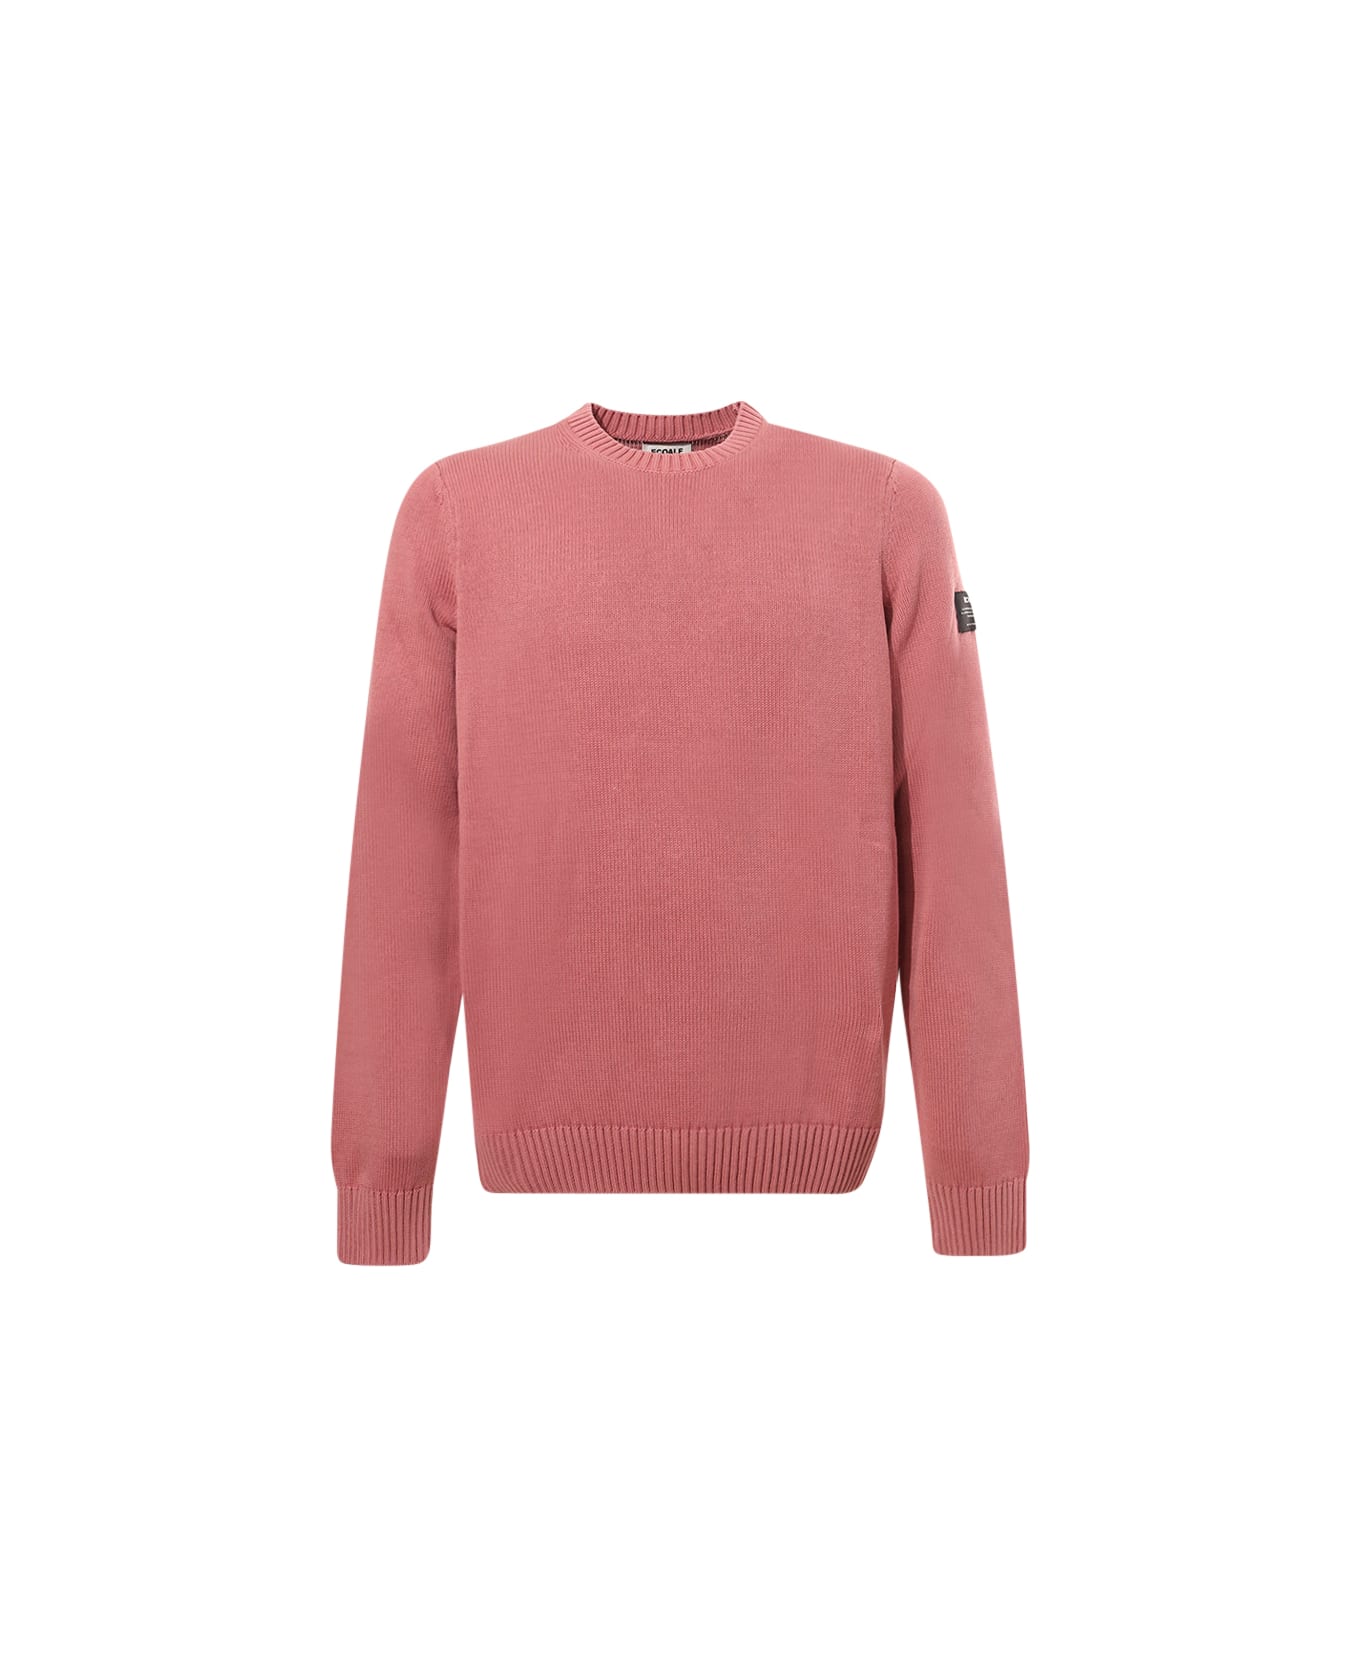 Ecoalf Sweater - Pink ニットウェア